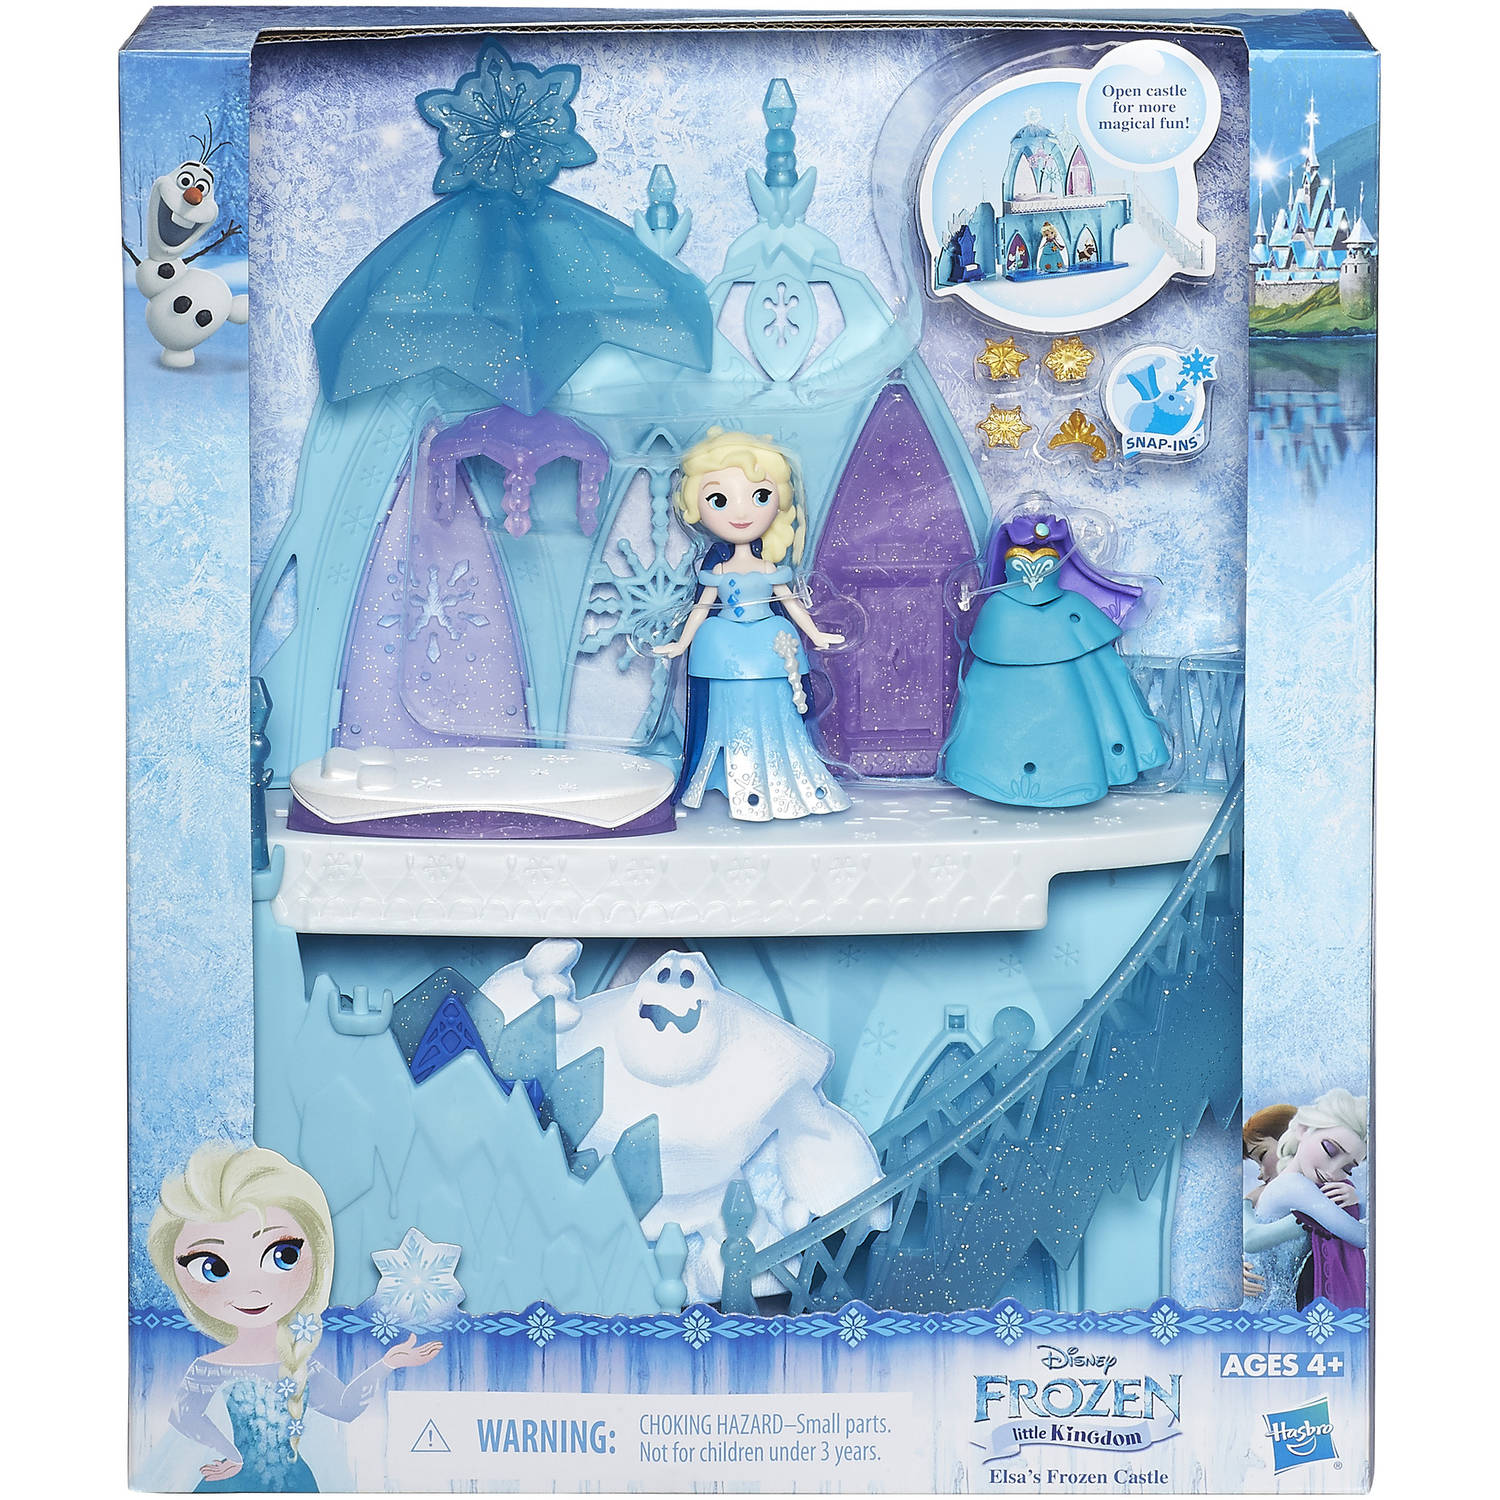 Disney Frozen Little Kingdom Elsa's Frozen Castle - image 2 of 12